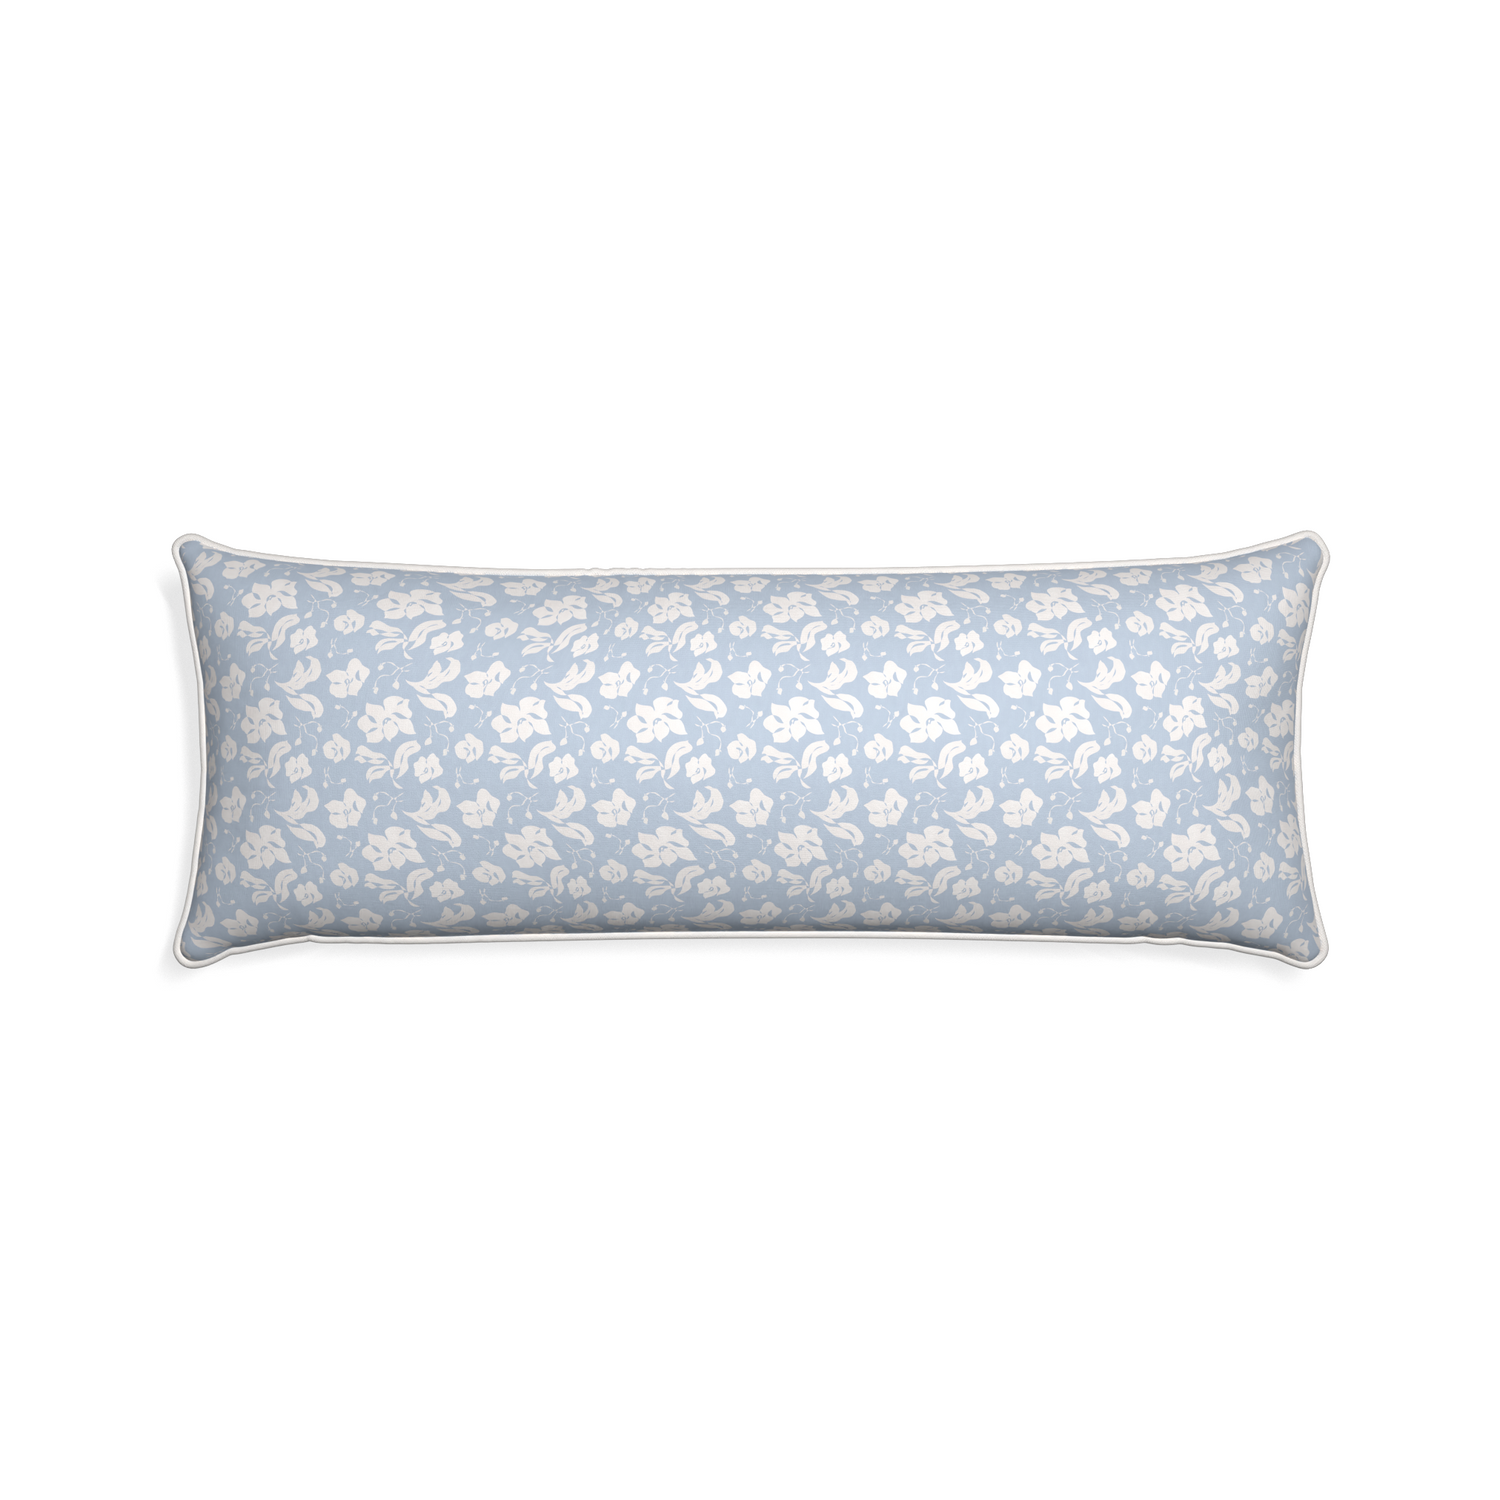 Xl-lumbar georgia custom pillow with snow piping on white background